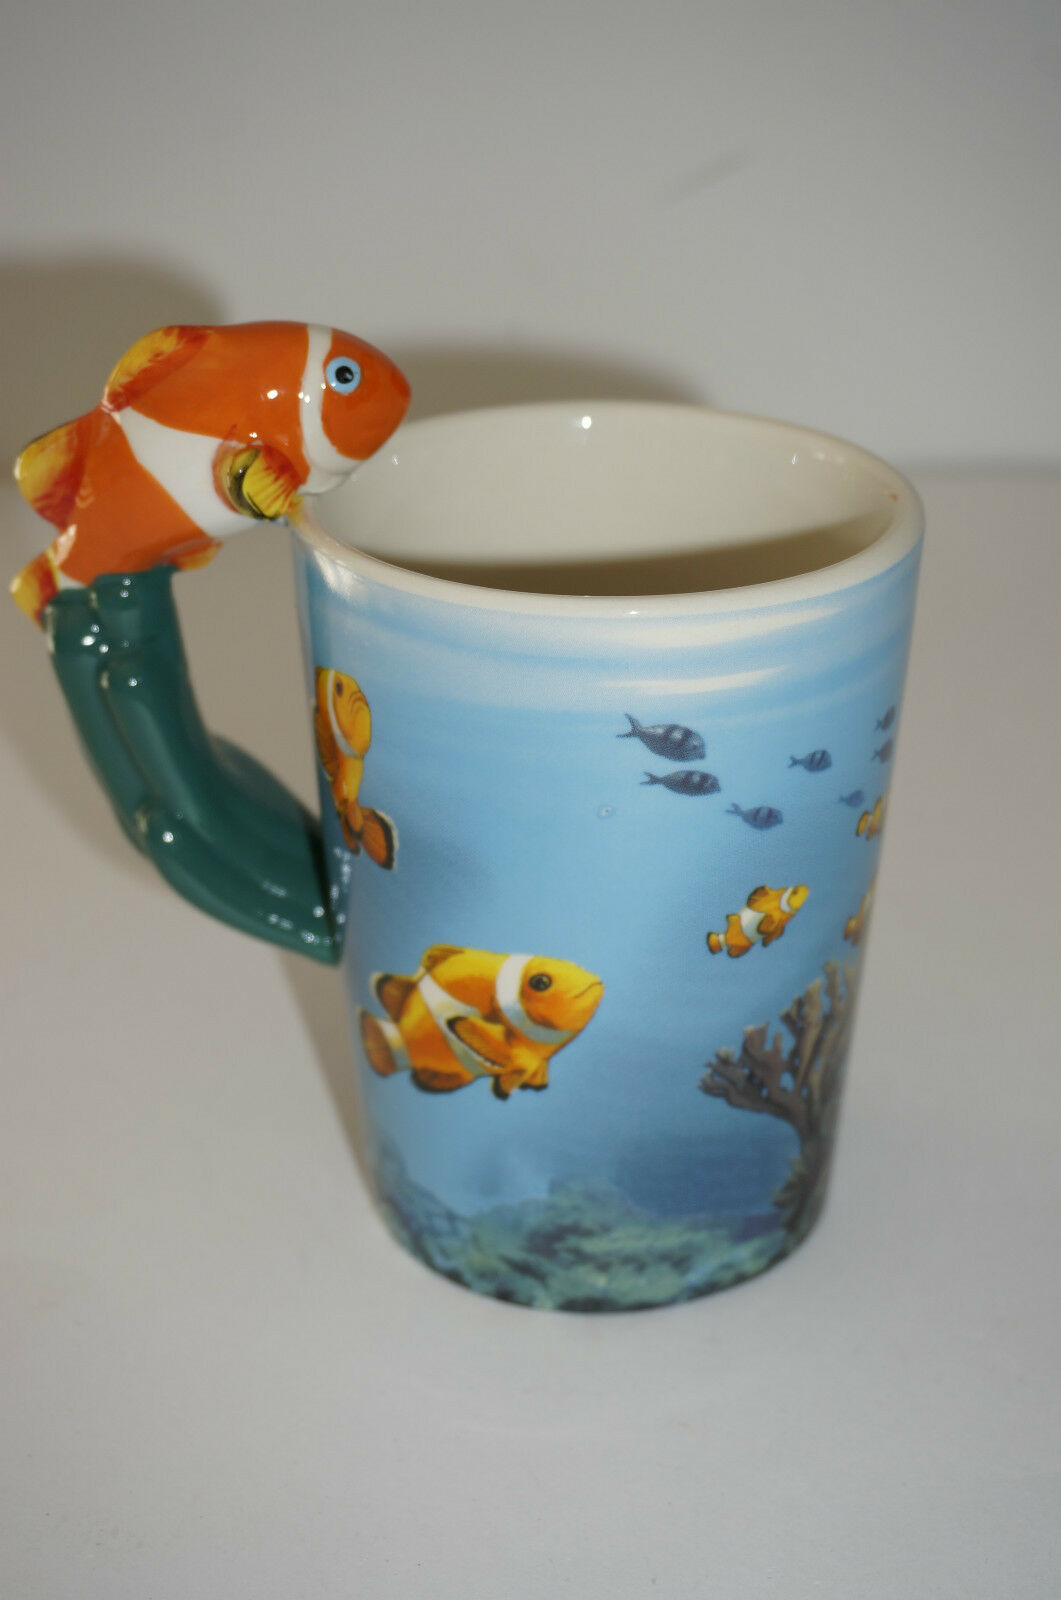 Nemo clown fish Coffee Mug Cup bone China Fantasy Animal jungle novelty gift